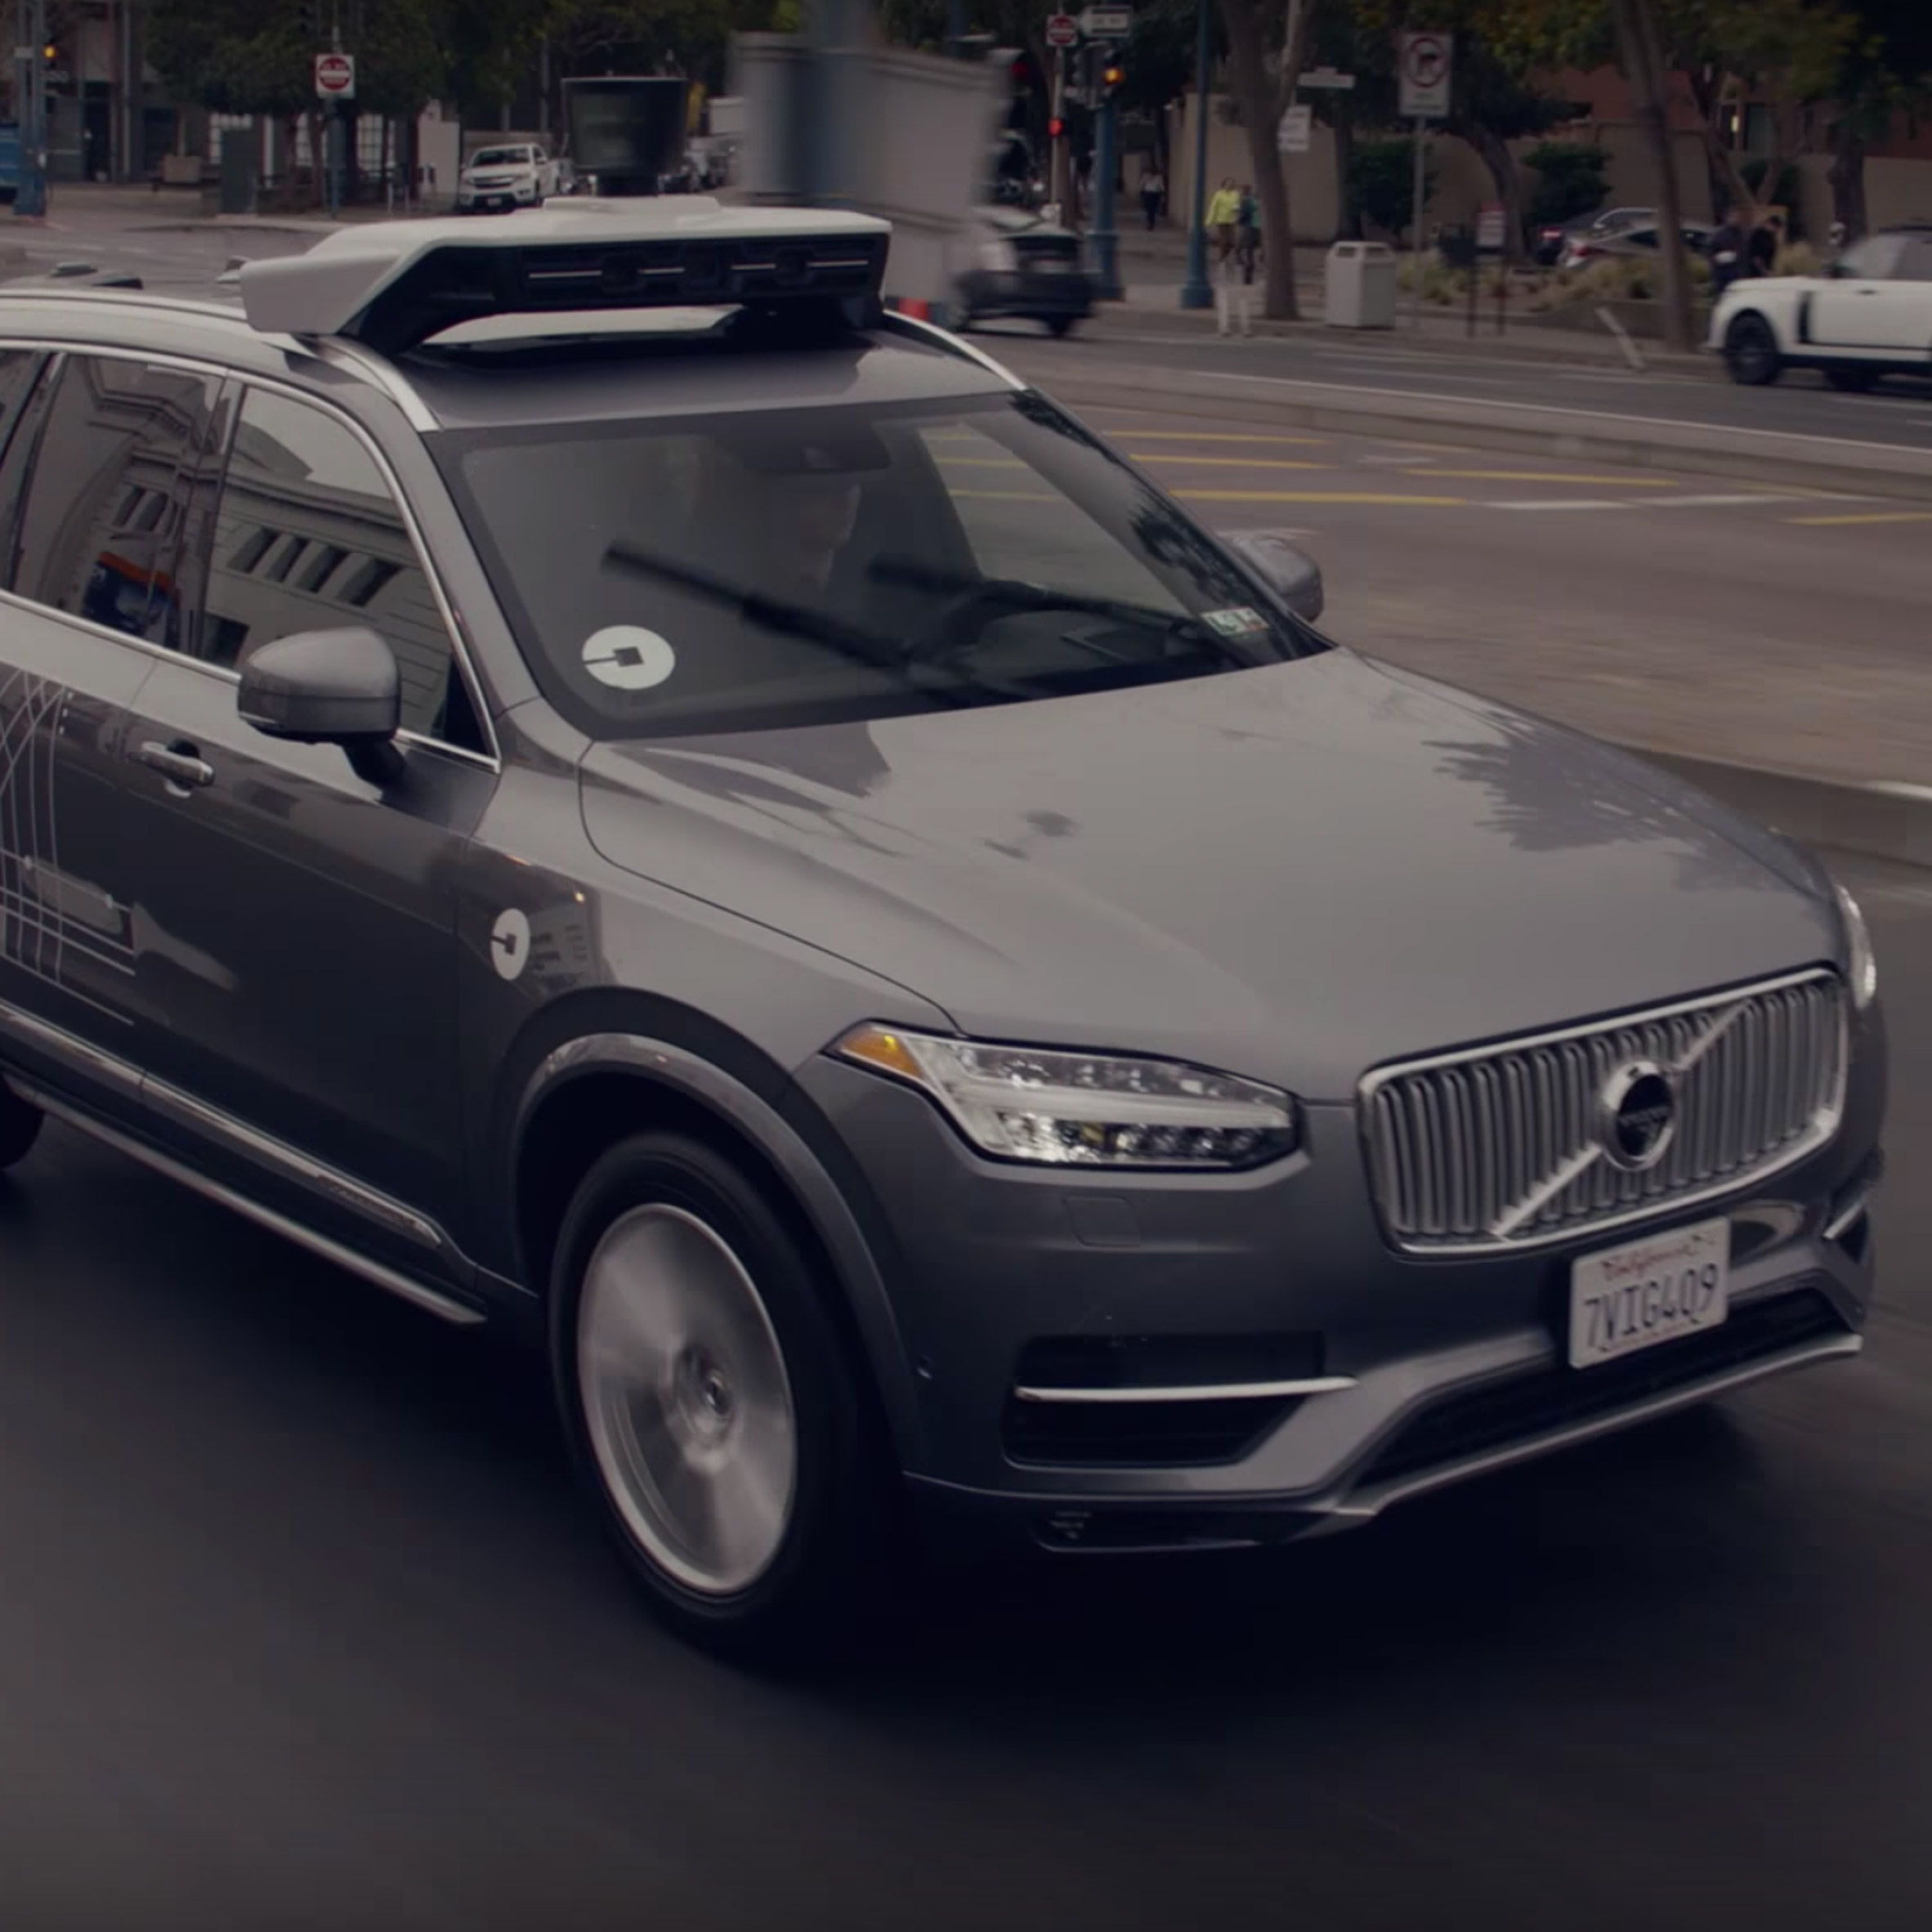 Uber edges towards driverless taxis with Daimler partnership